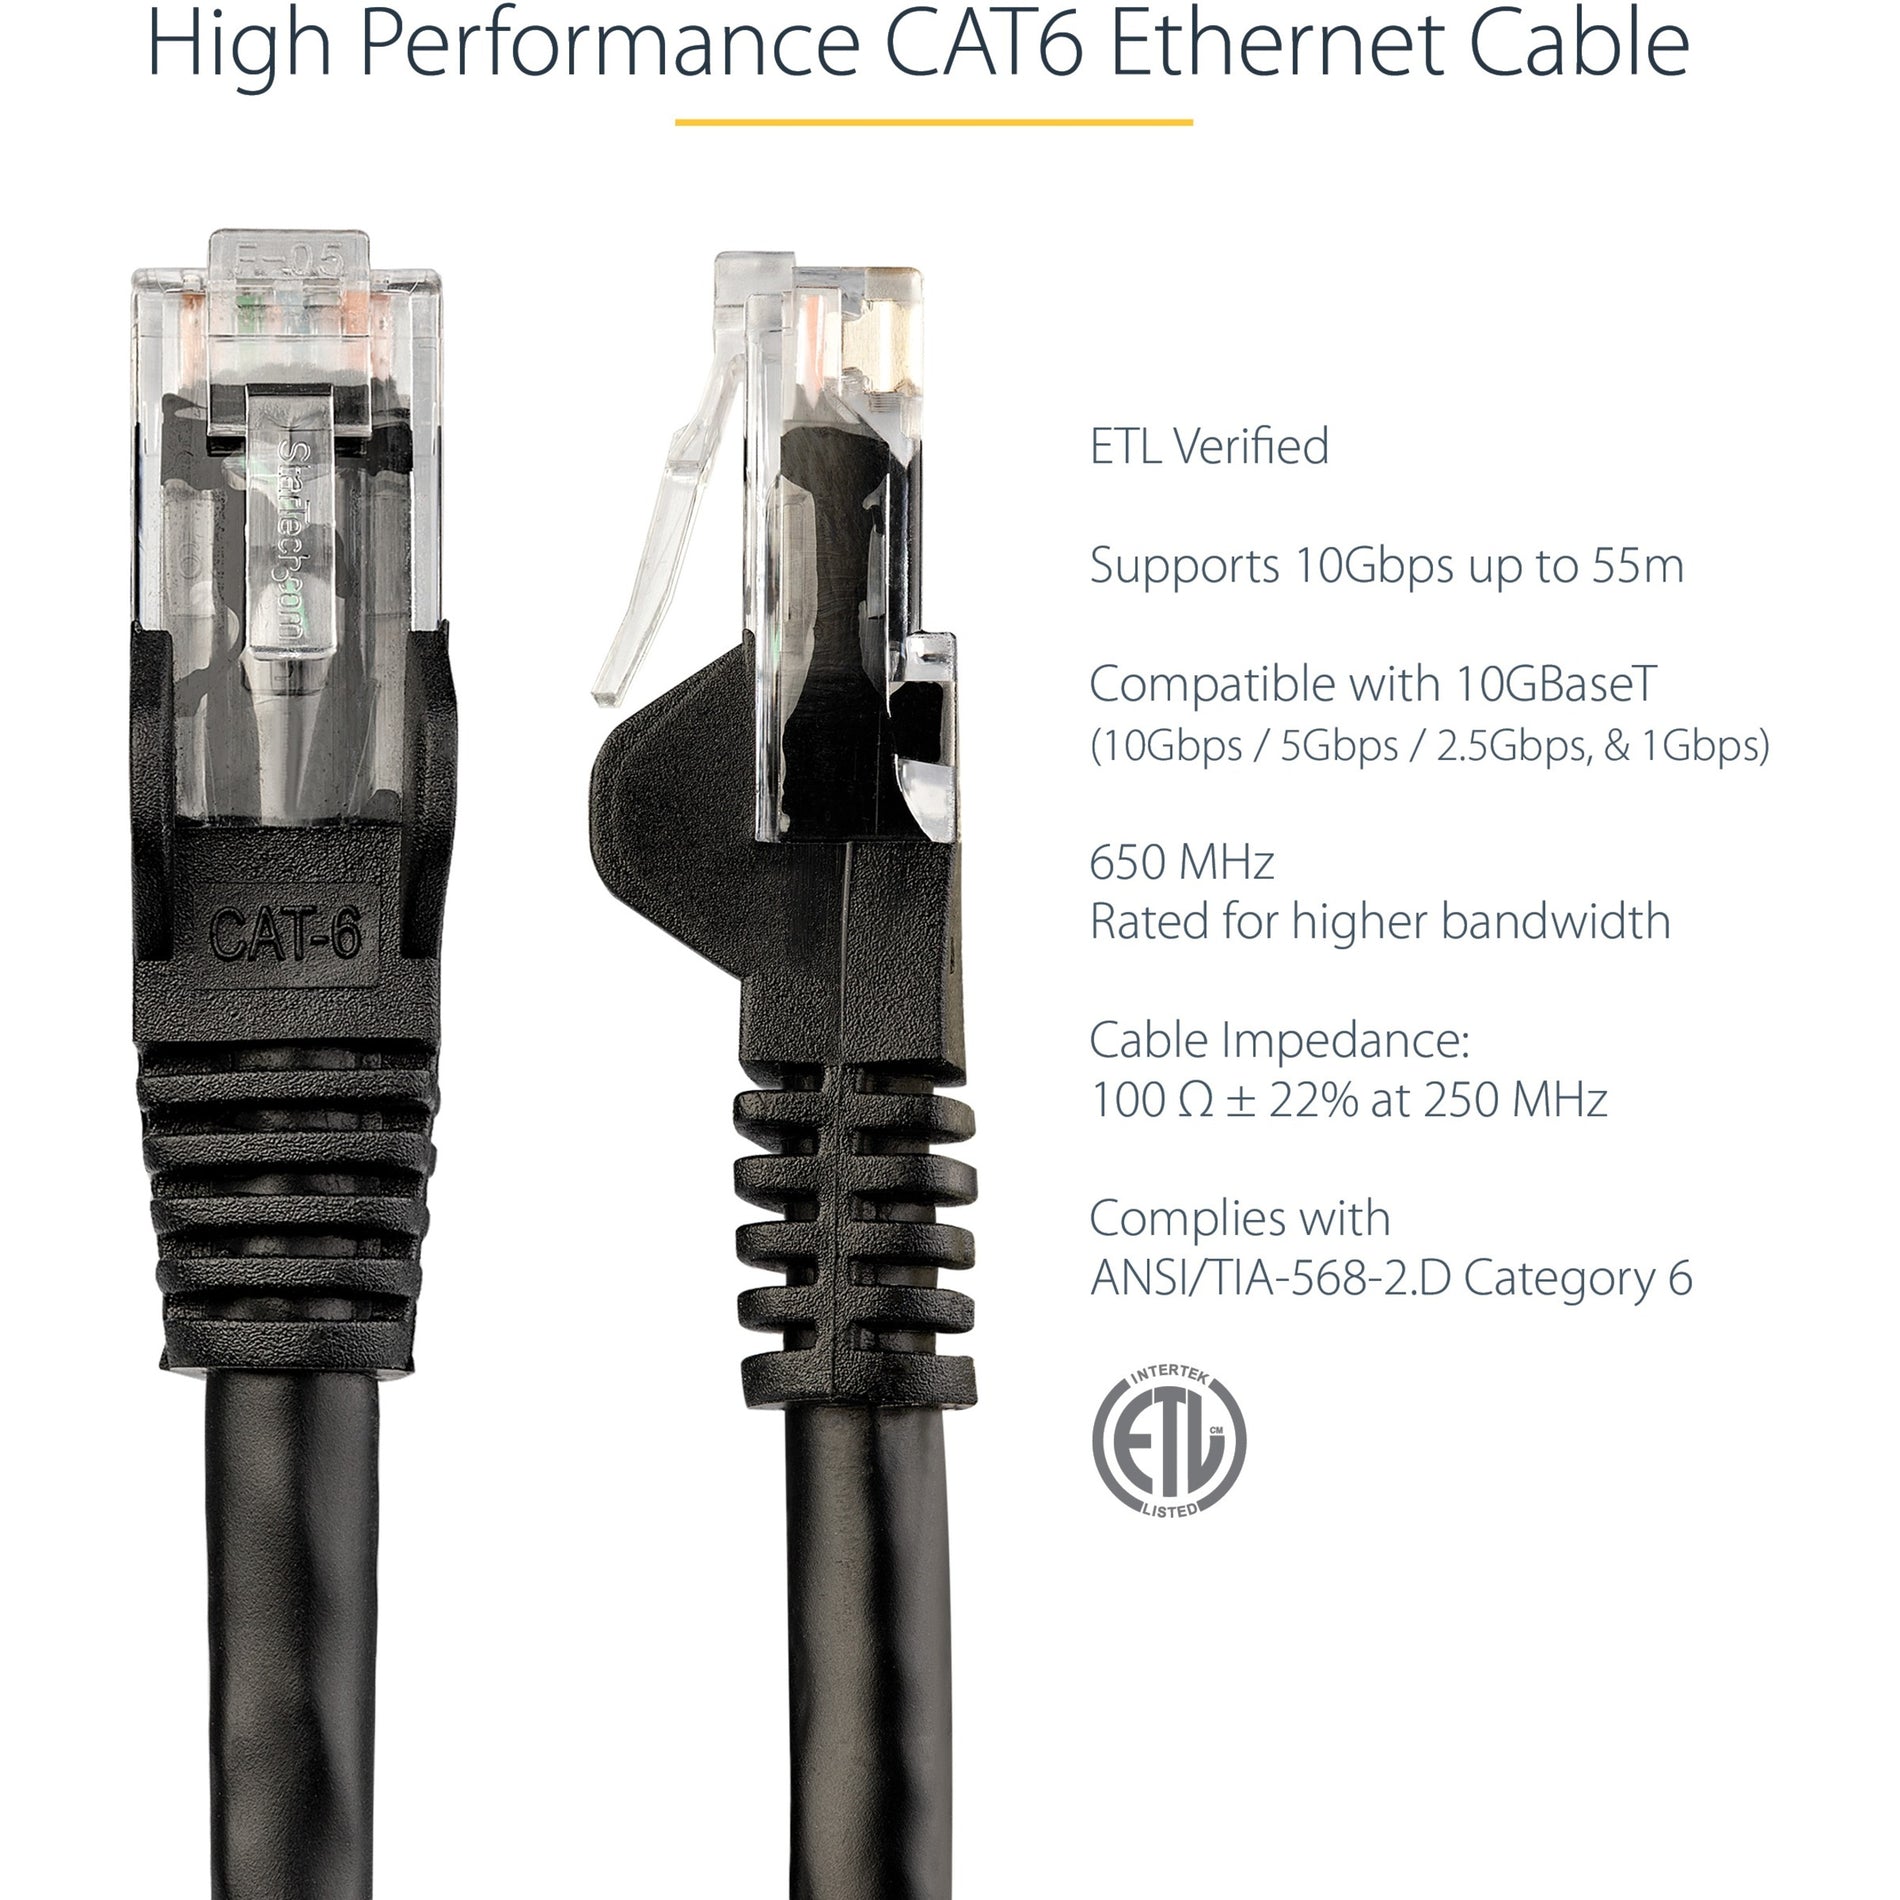 StarTech.com N6PATCH20BK Cat. 6 Network Cable, 20ft Black Ethernet Cable, Snagless RJ45 Connectors